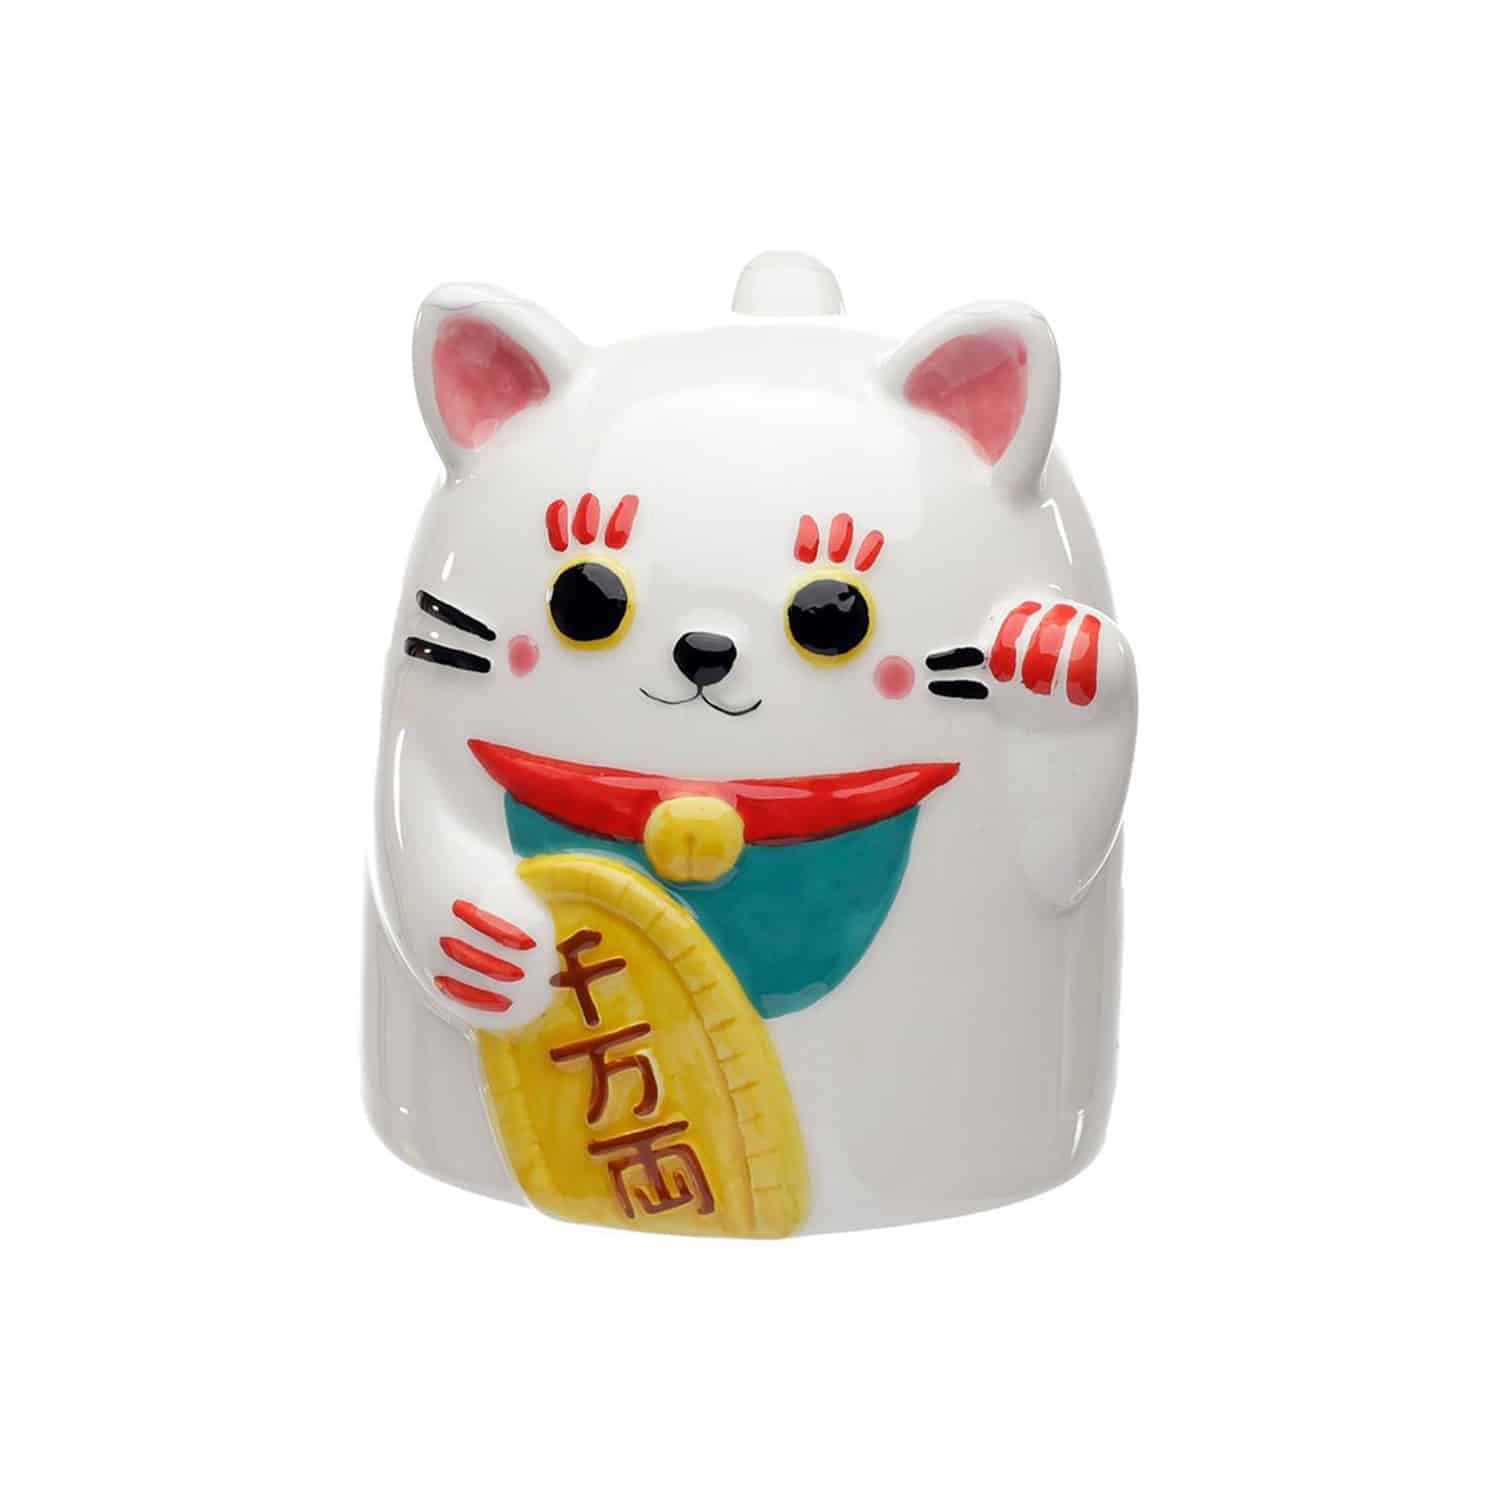 Maneki Neko Lucky Cat Upside Down Mug